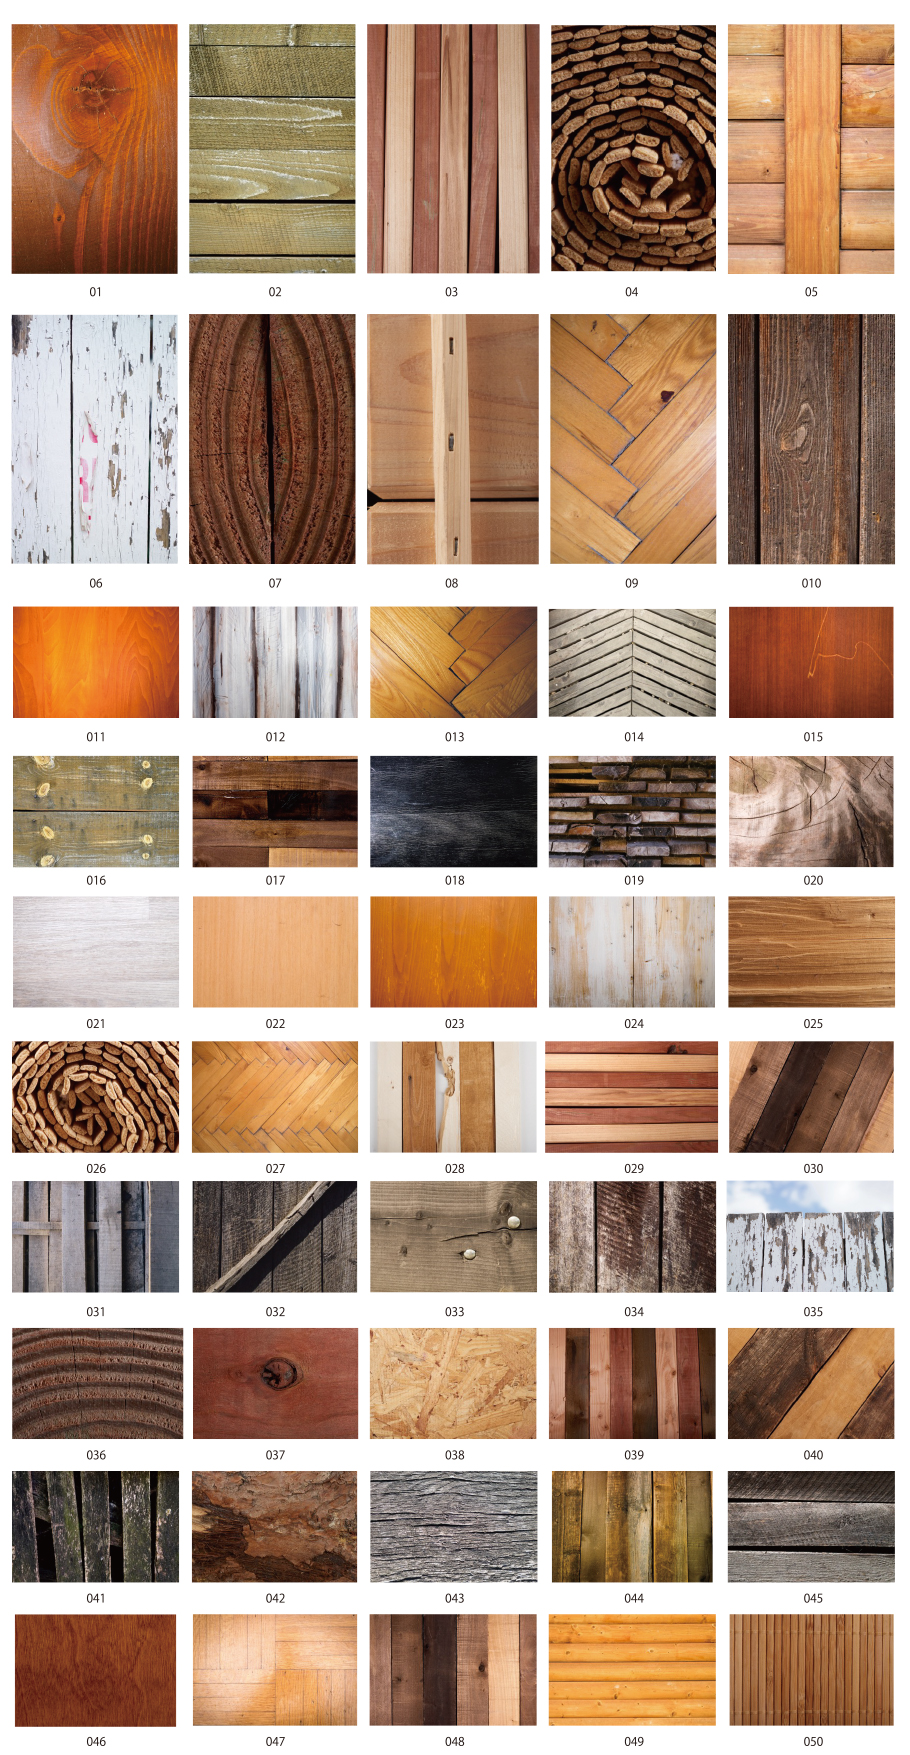 Wood texture photos vol2